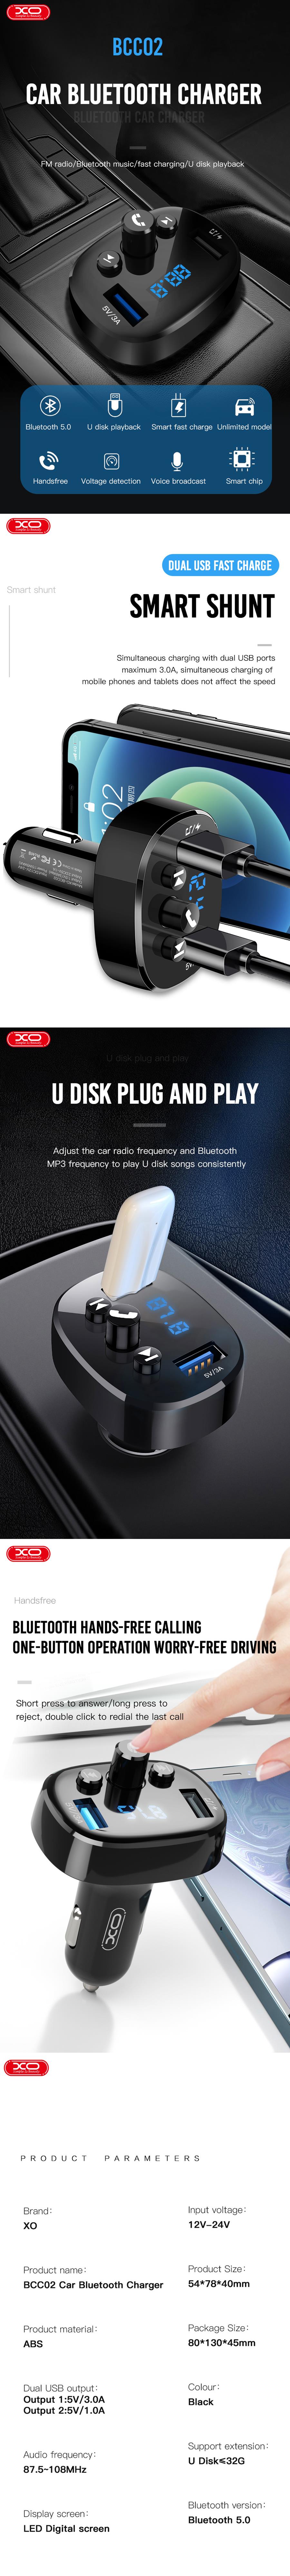 XO transmiter FM BCC02 Bluetooth MP3 car charger 15W black